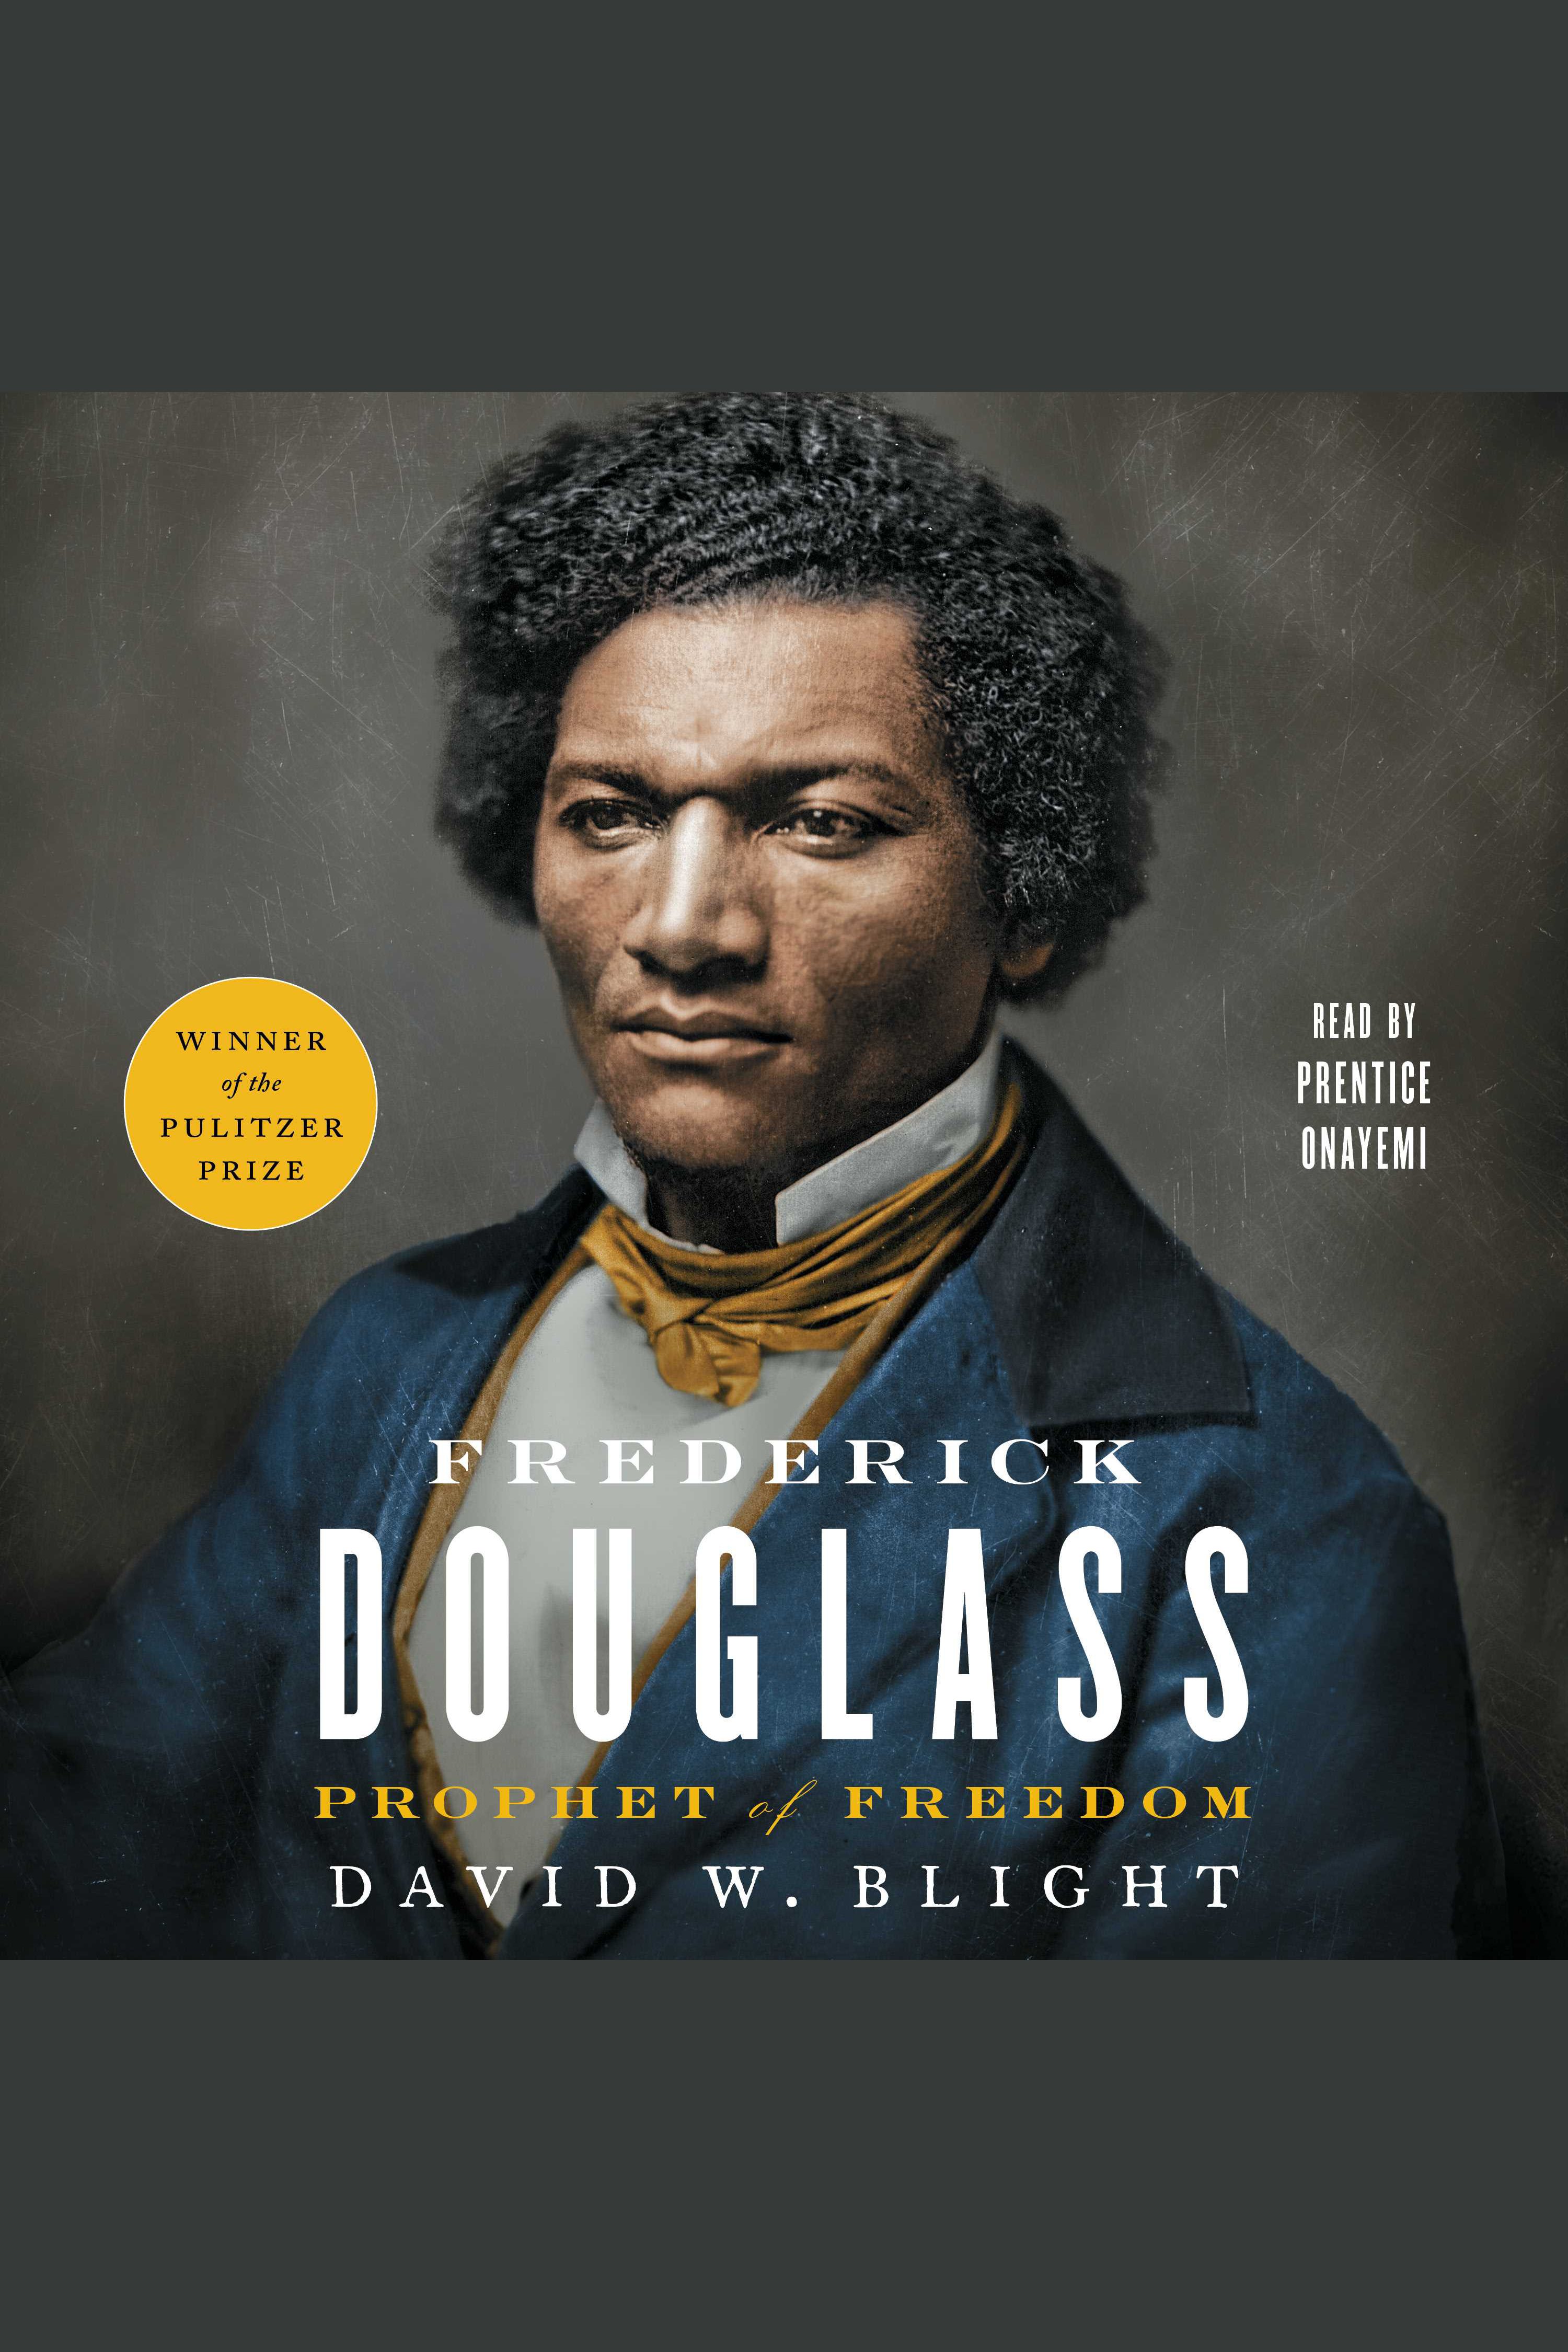 Frederick Douglass prophet of freedom cover image